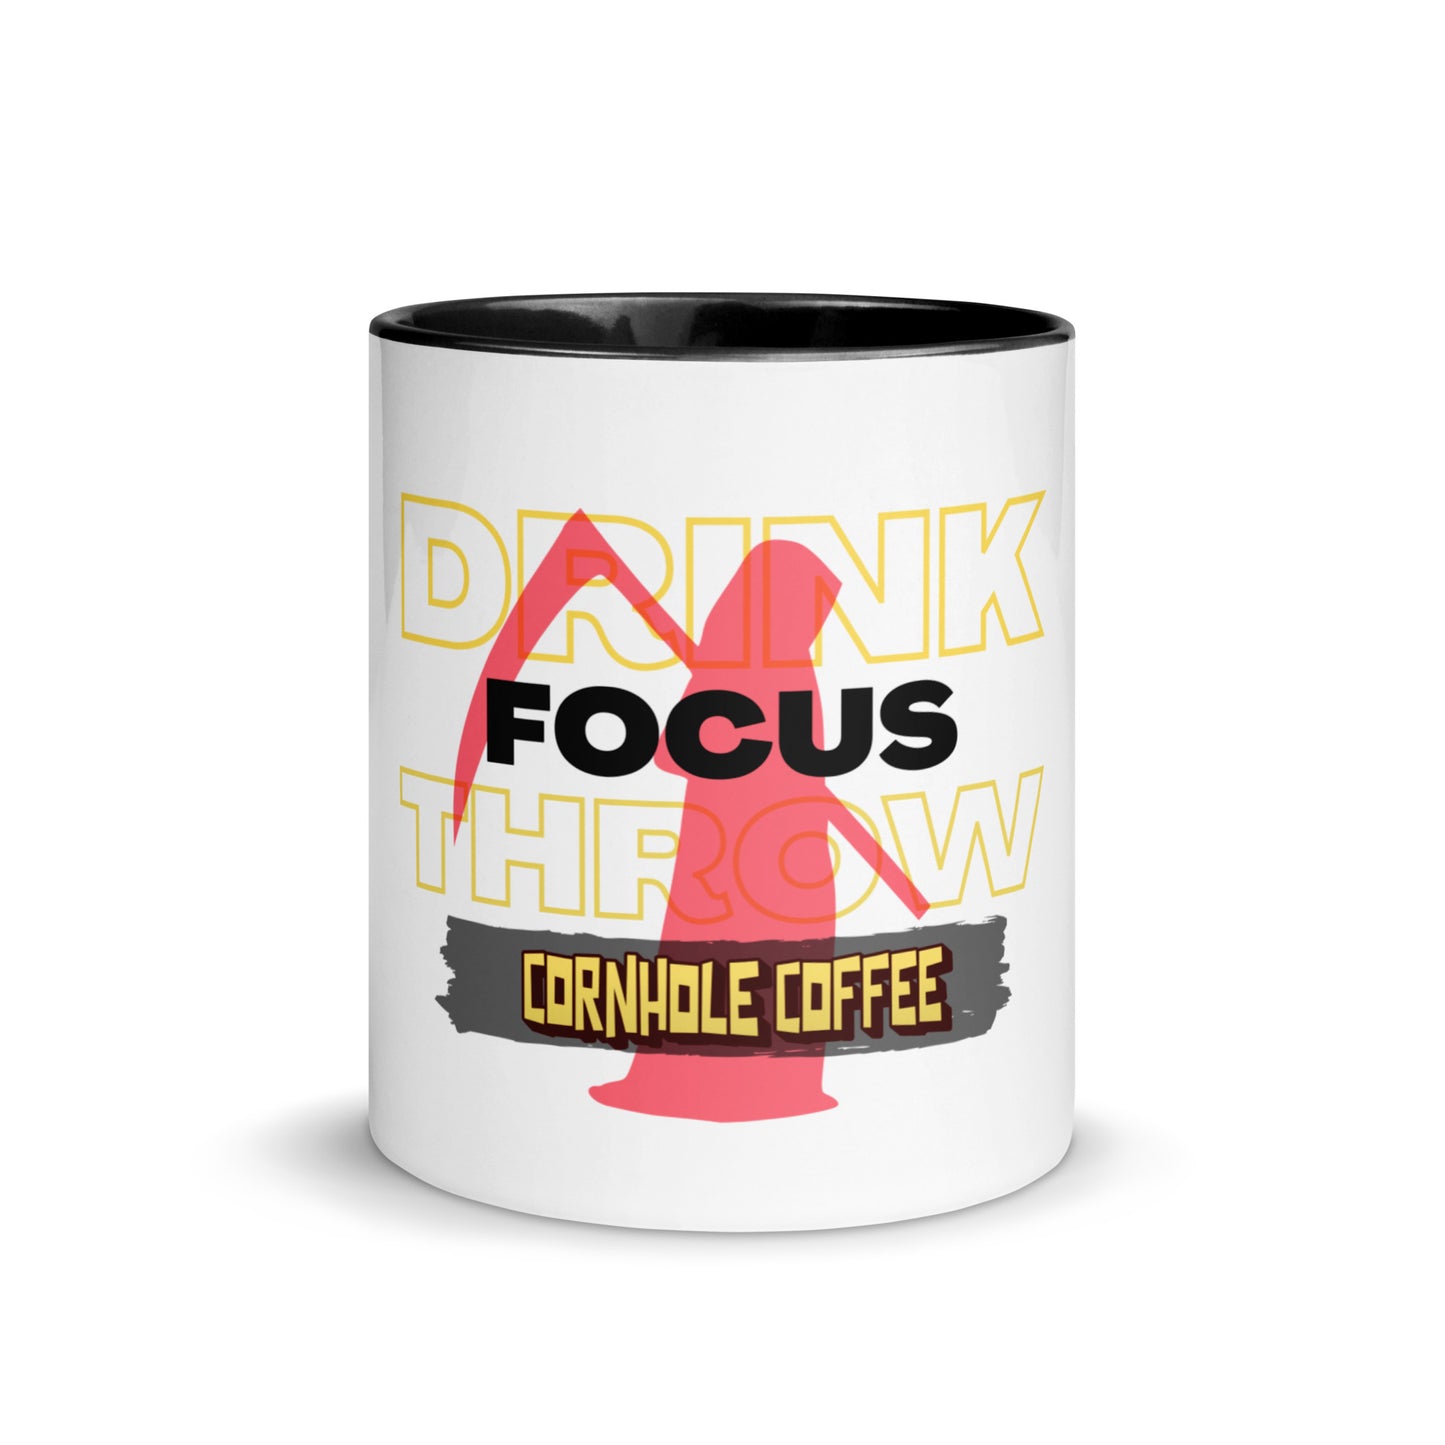 Drink, Focus, & Throw Coffee Mug